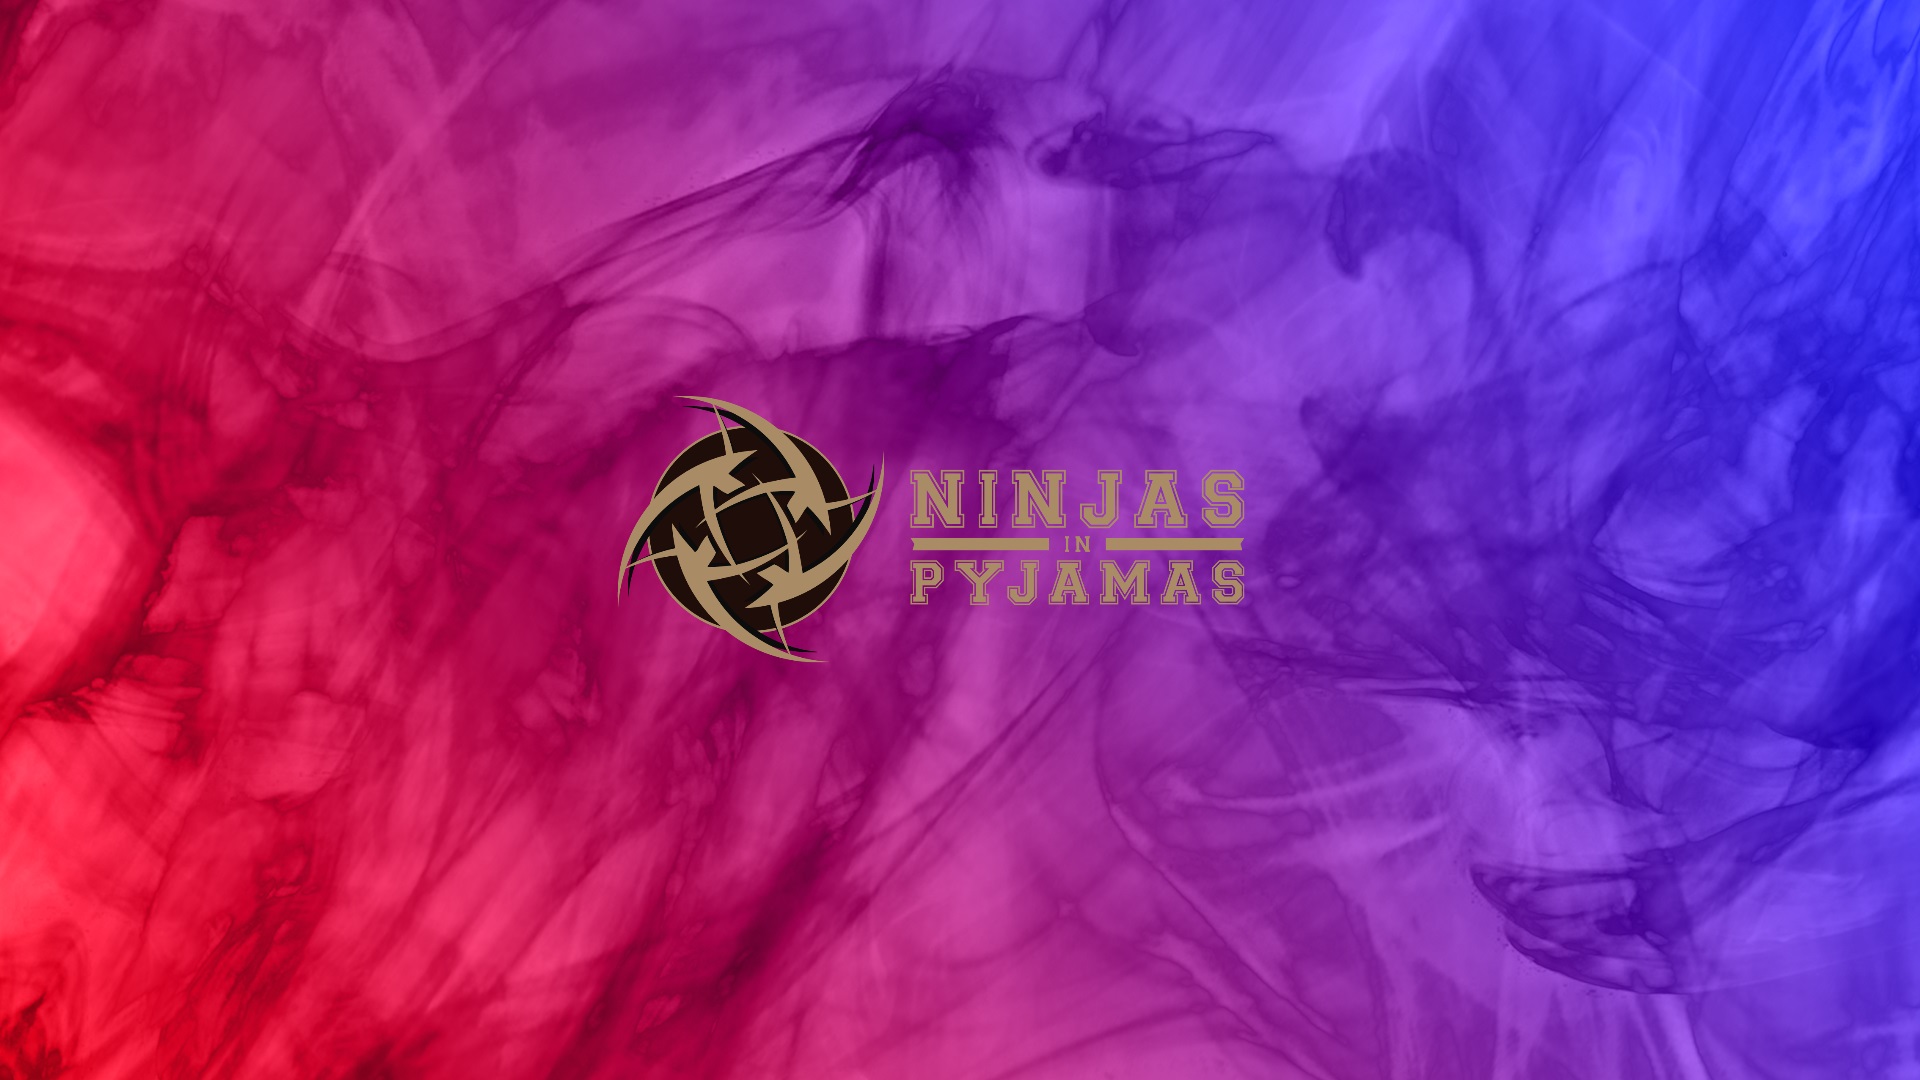 ninjas im pyjama wallpaper,lila,violett,rosa,rot,flagge